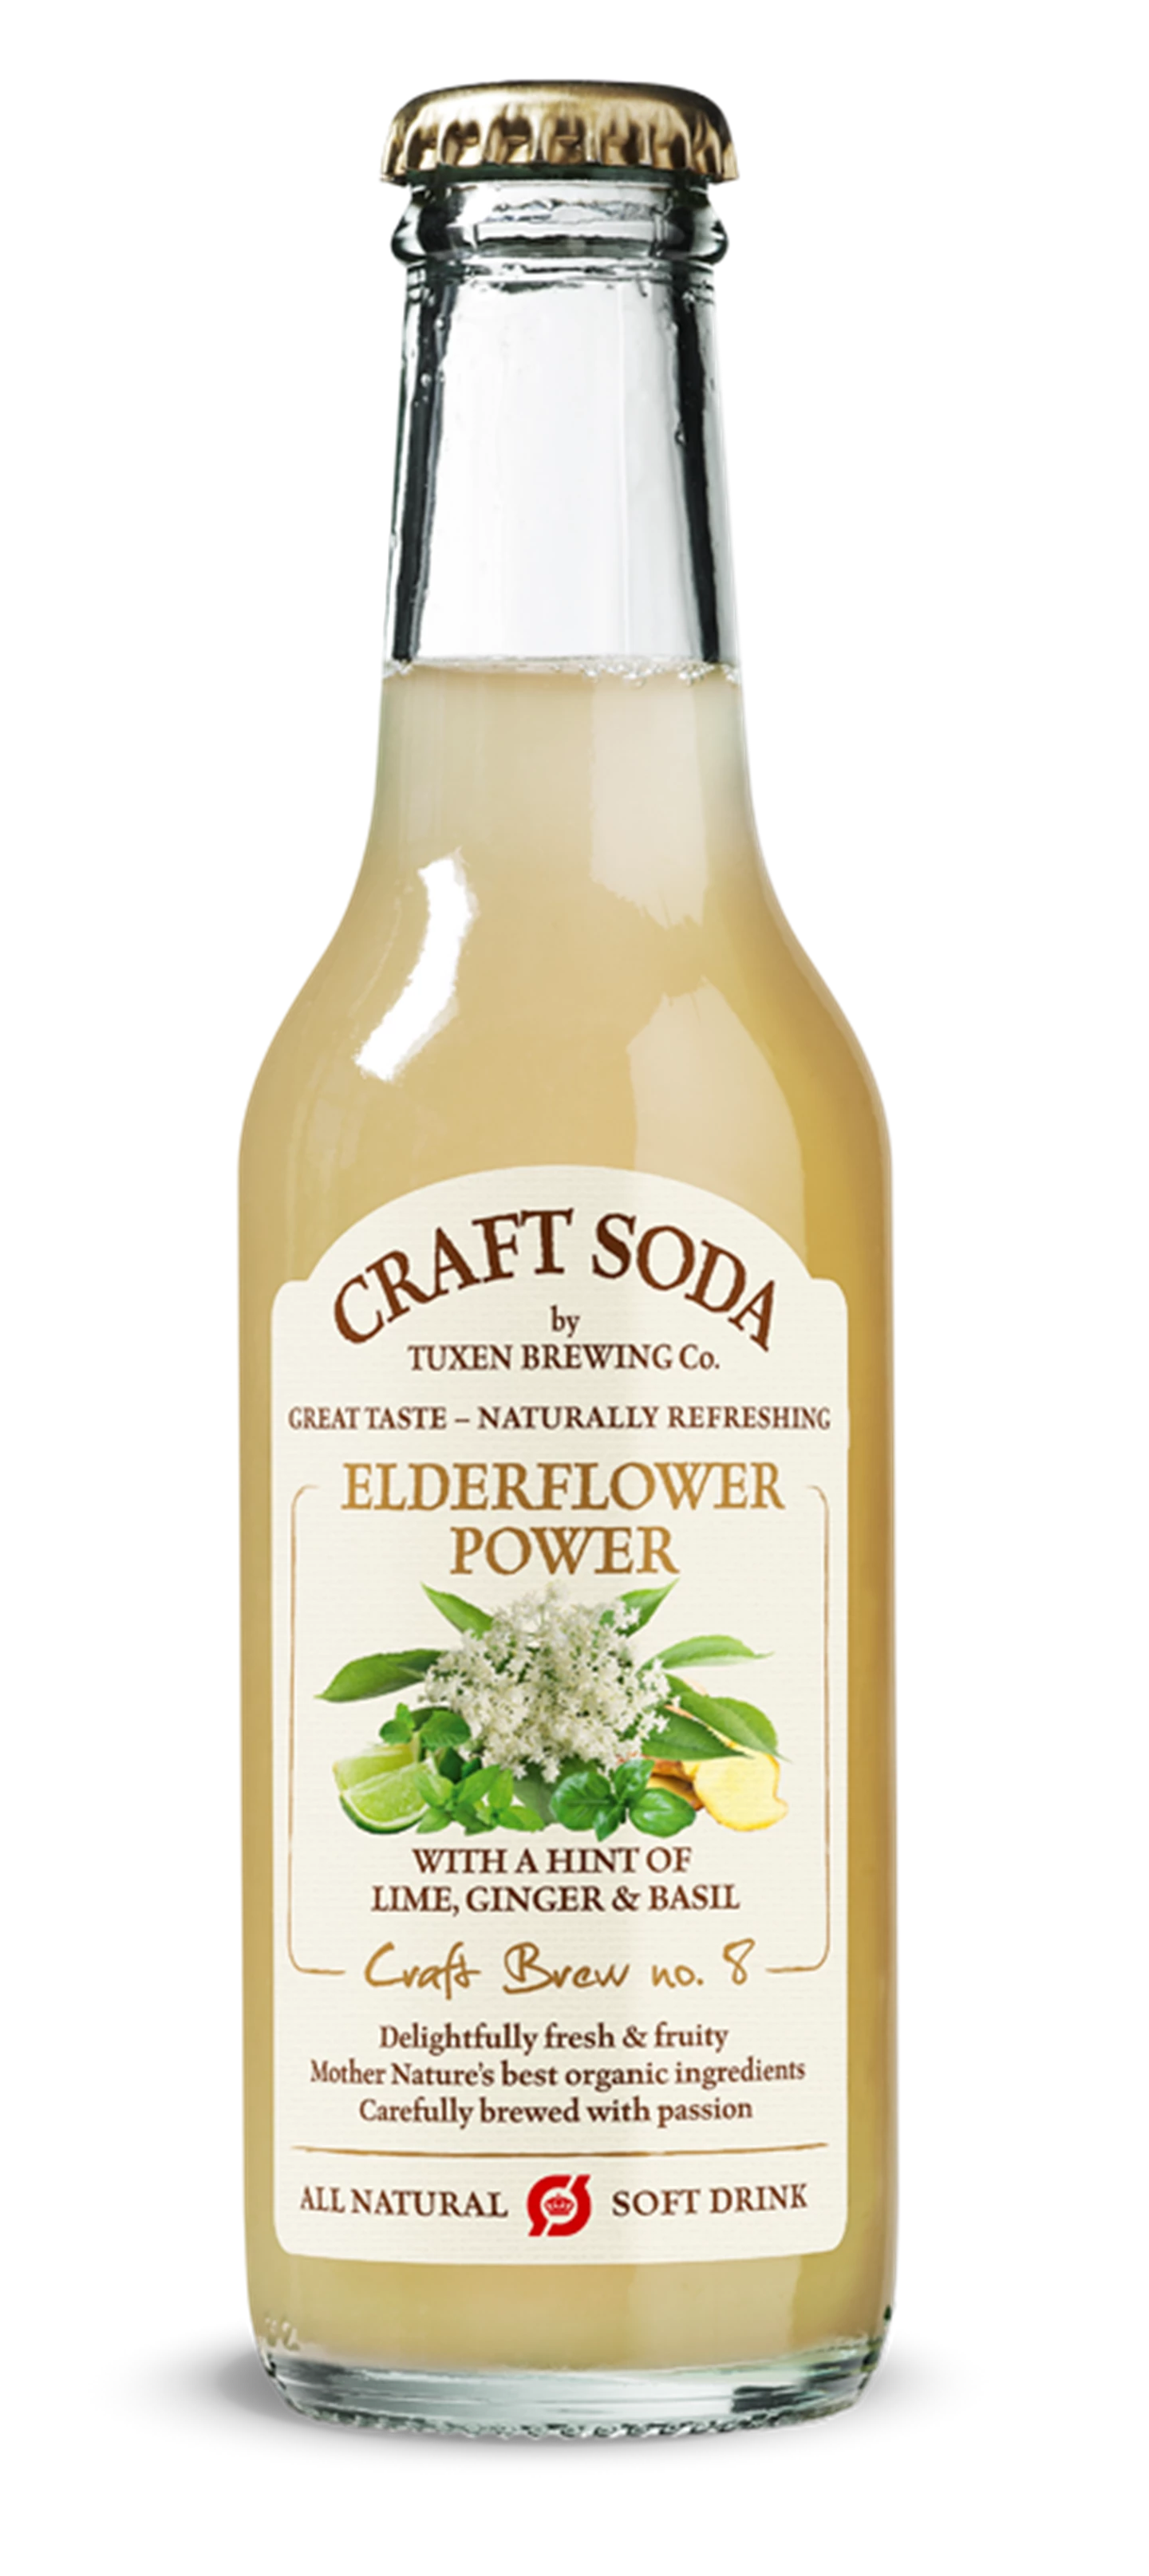 108555 - Craft Soda - Elderflower Power, pack shot Dry